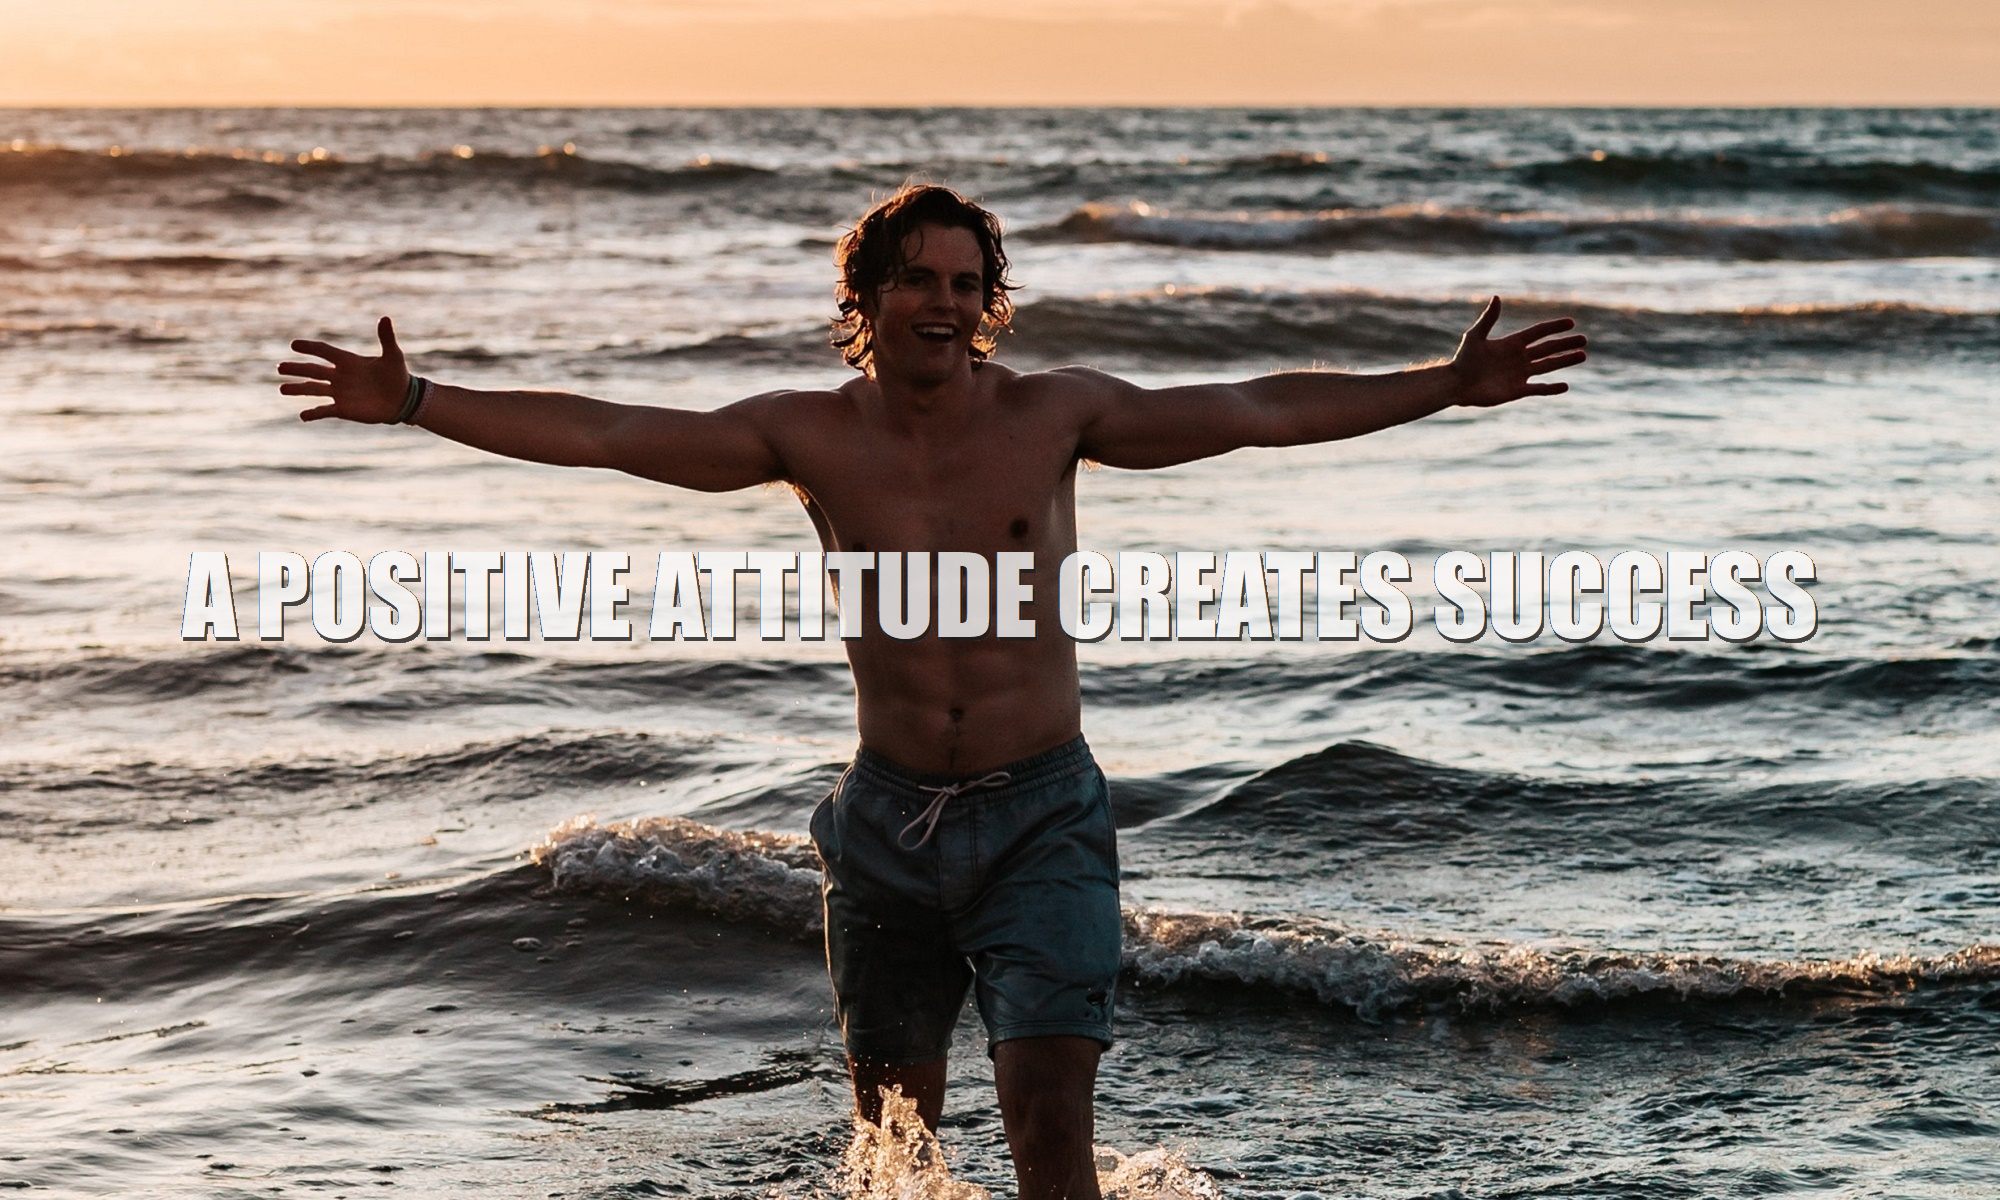 Postive-thinking-attitude-creates-success-7744-2000